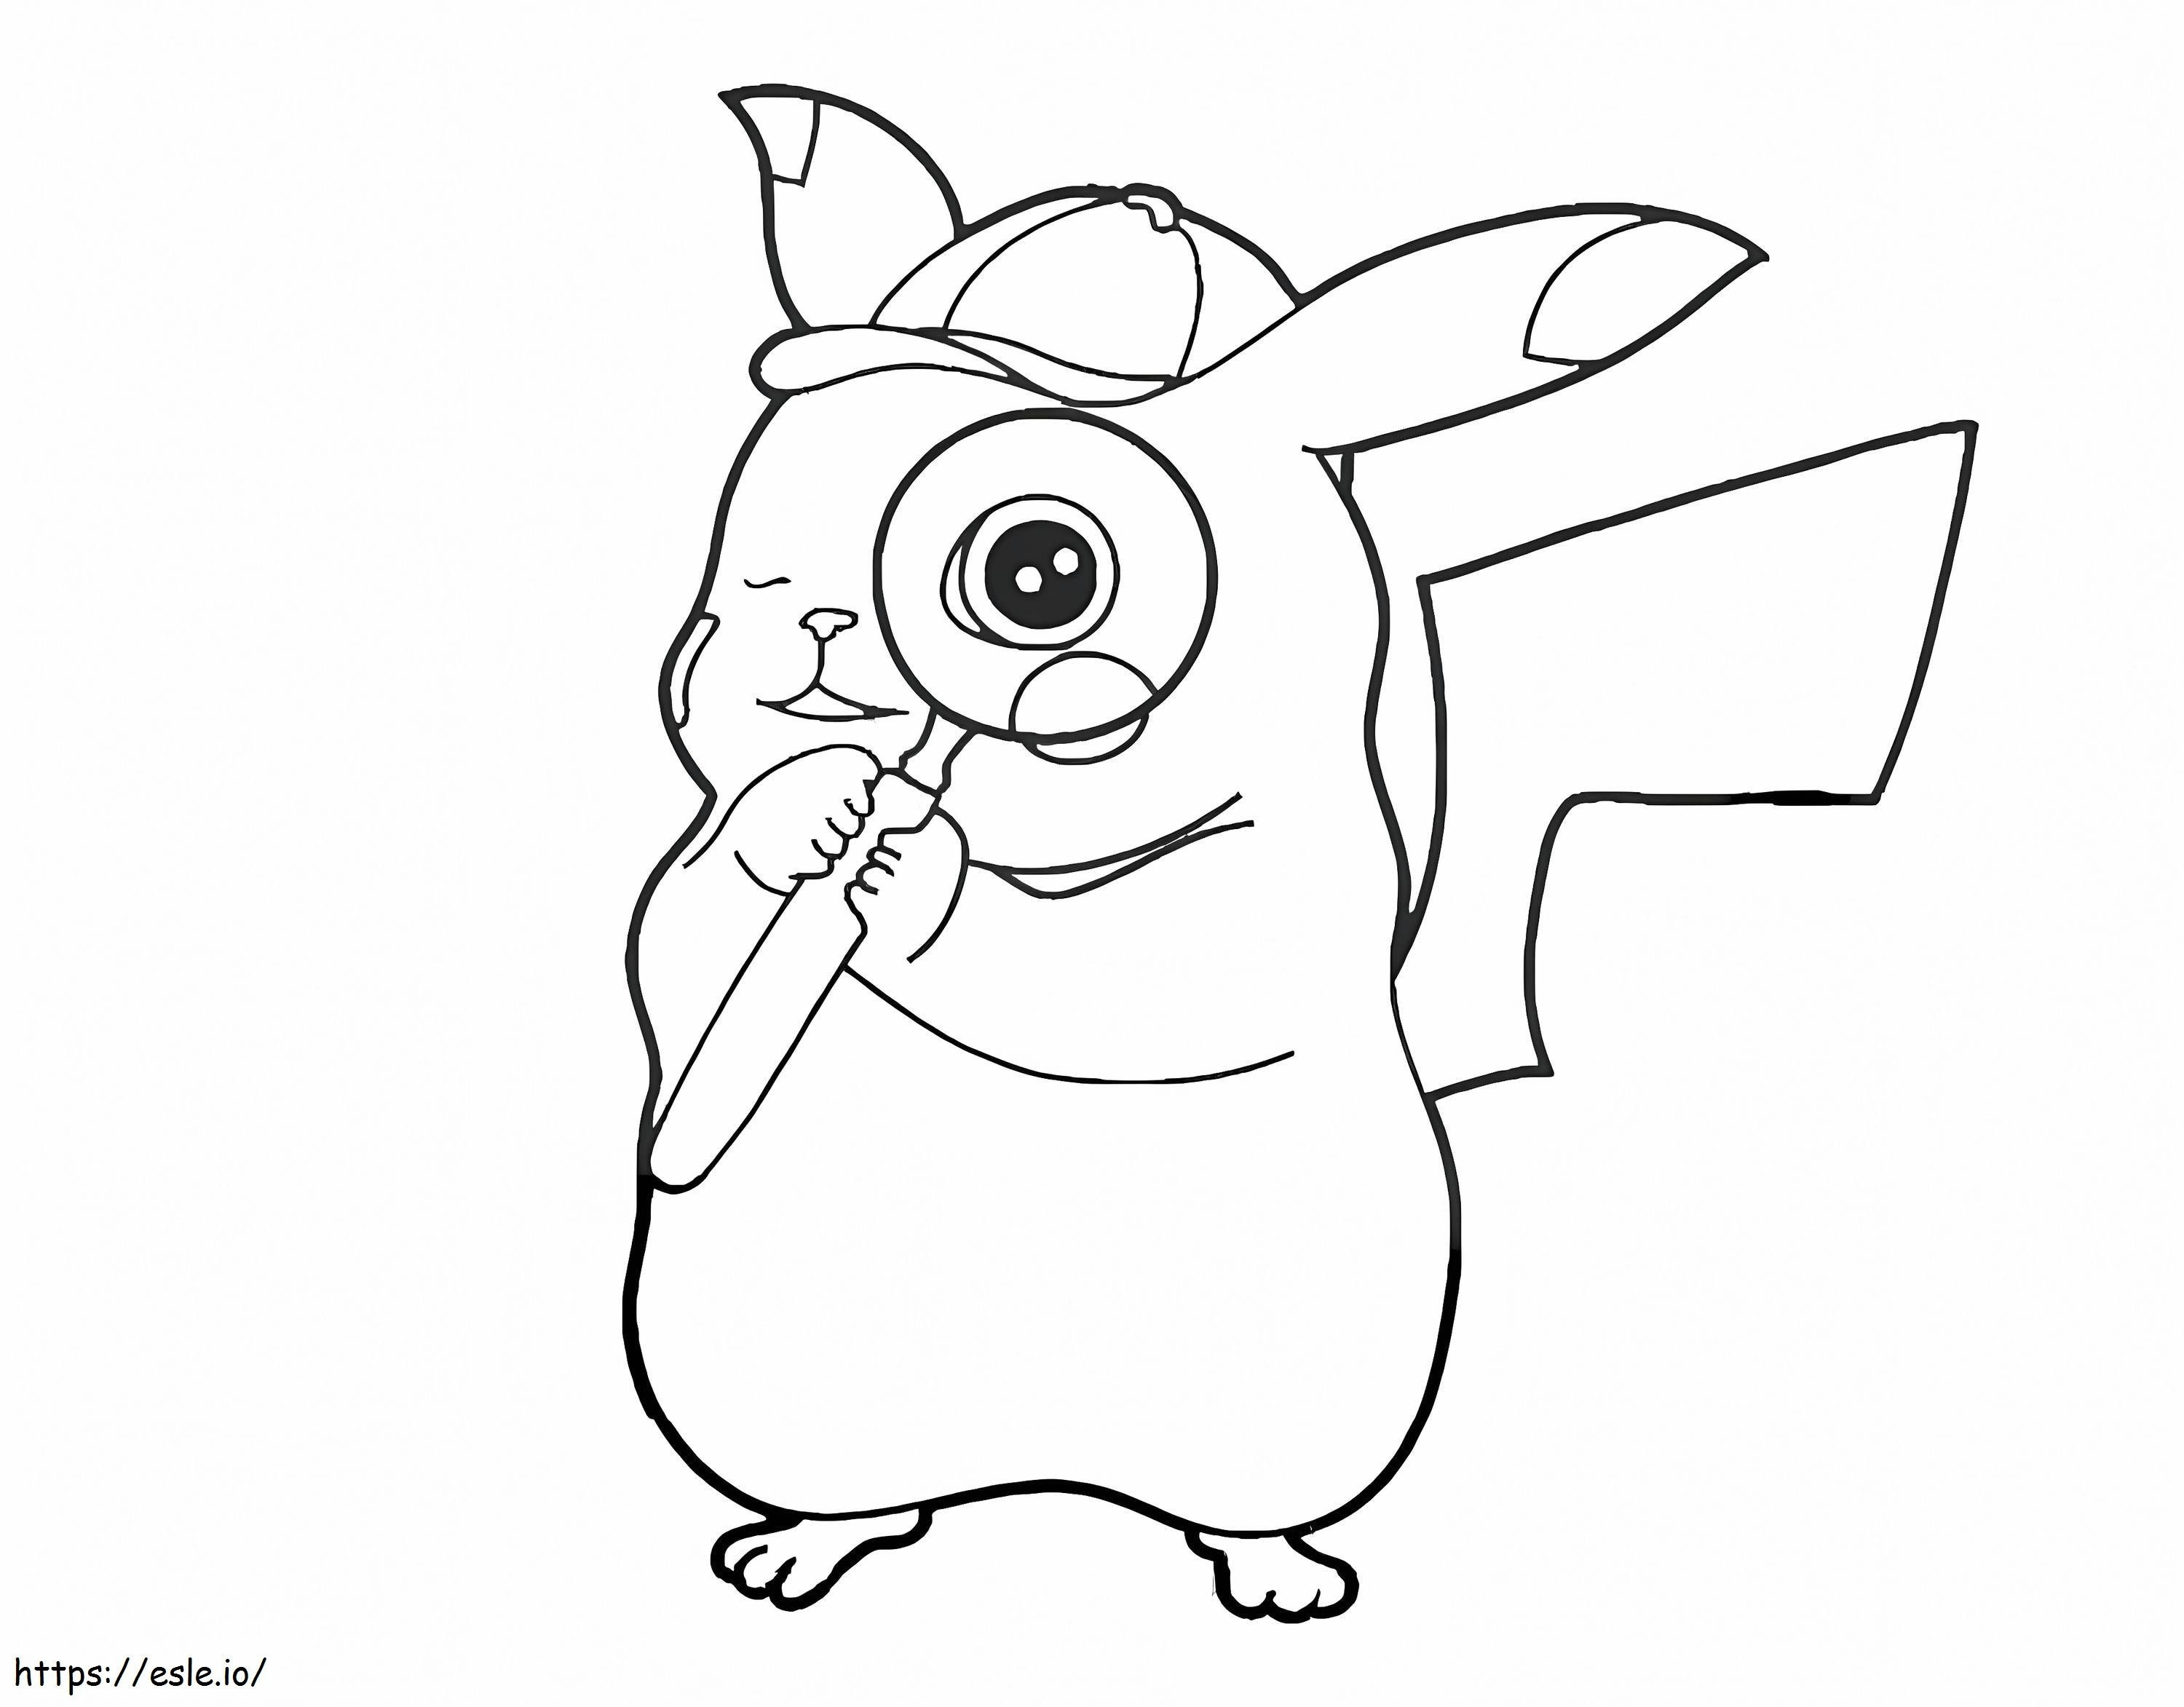 Detetive Pikachu para colorir